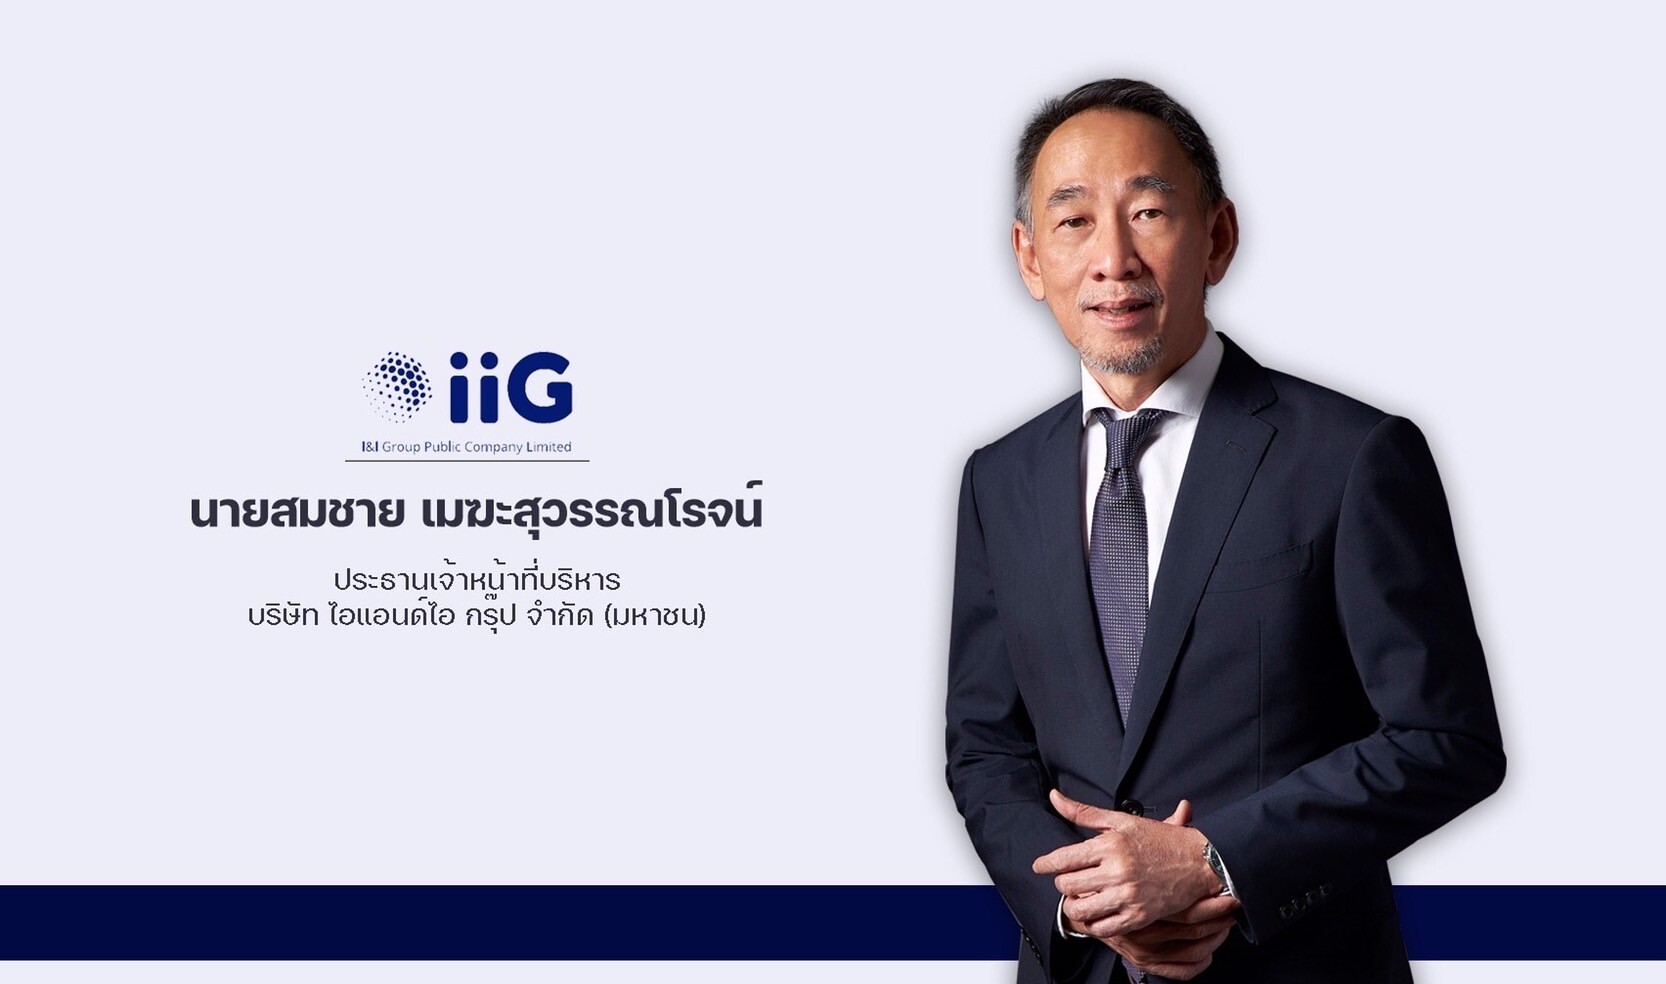 IIG เติบโตต่อเนื่อง รายได้ปี 64 แตะ 690 ล้านบาท บอร์ดเคาะจ่ายปันผล 0.40 บาท/หุ้น 20 พ.ค.นี้